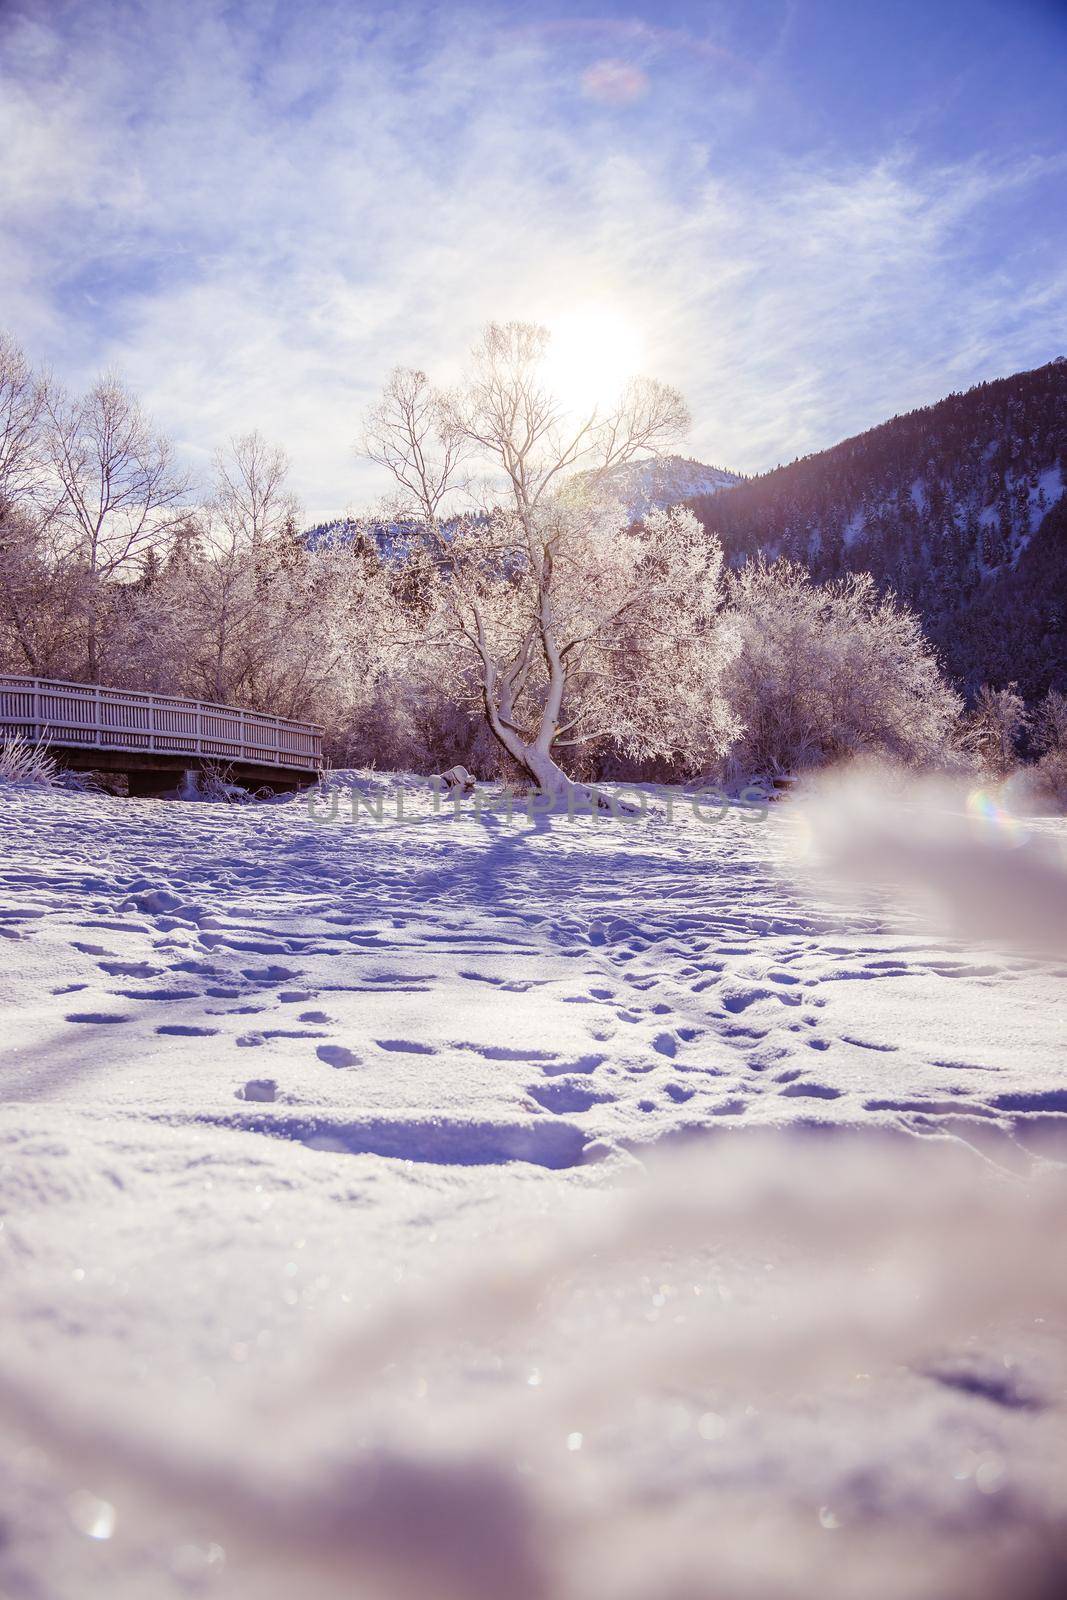 Idyllic winter landscape: wooden bridge and snowy trees, mountain range in background